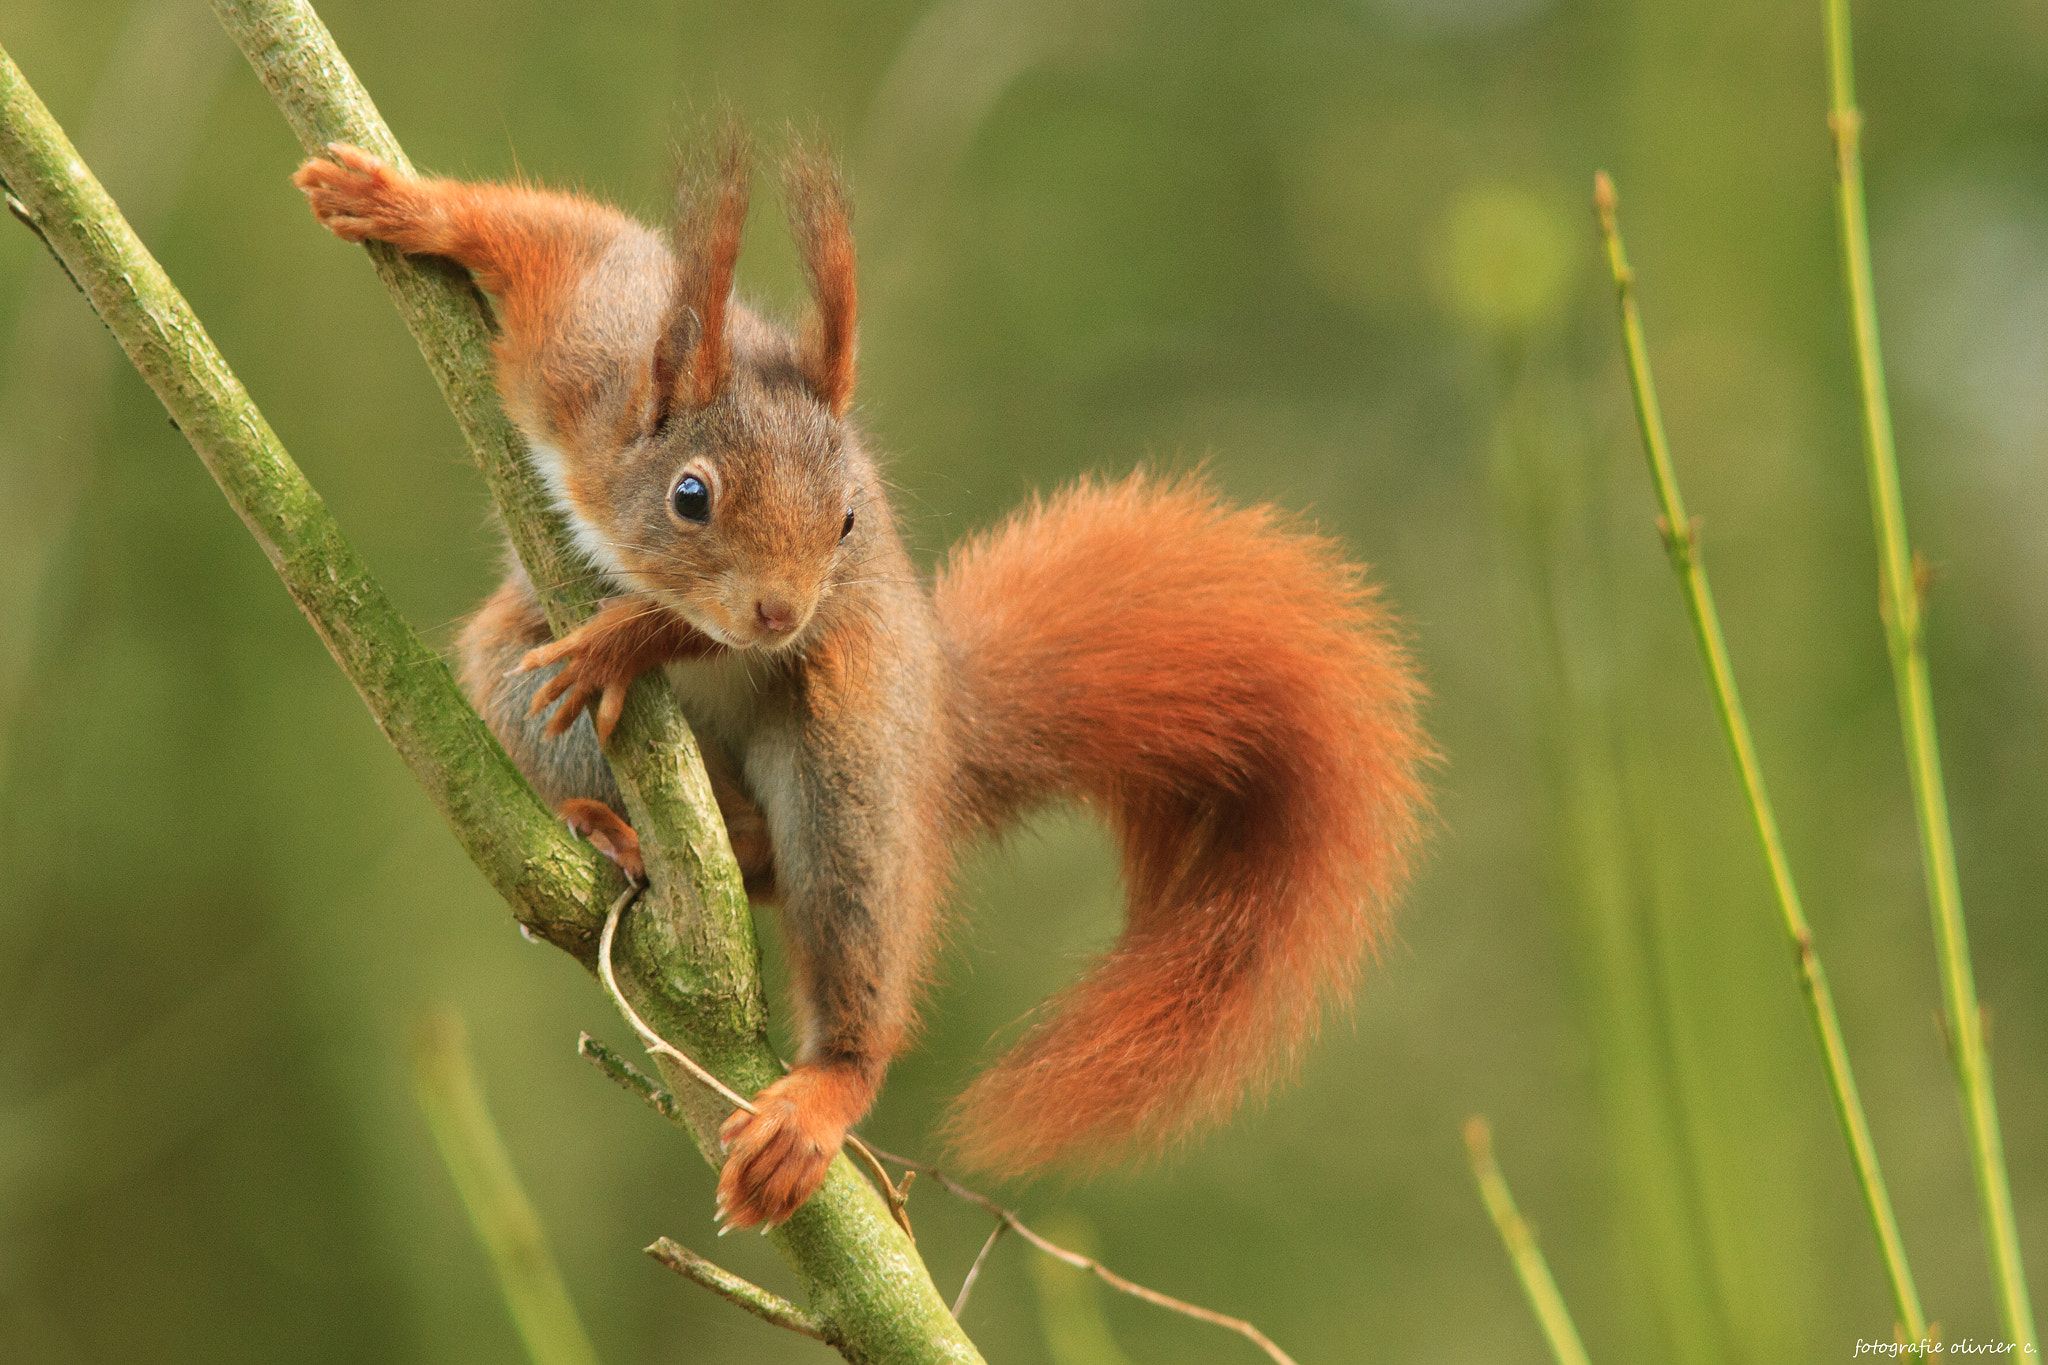 Pin by Tina Giancursio on Squirrels | Pinterest | Red squirrel ...